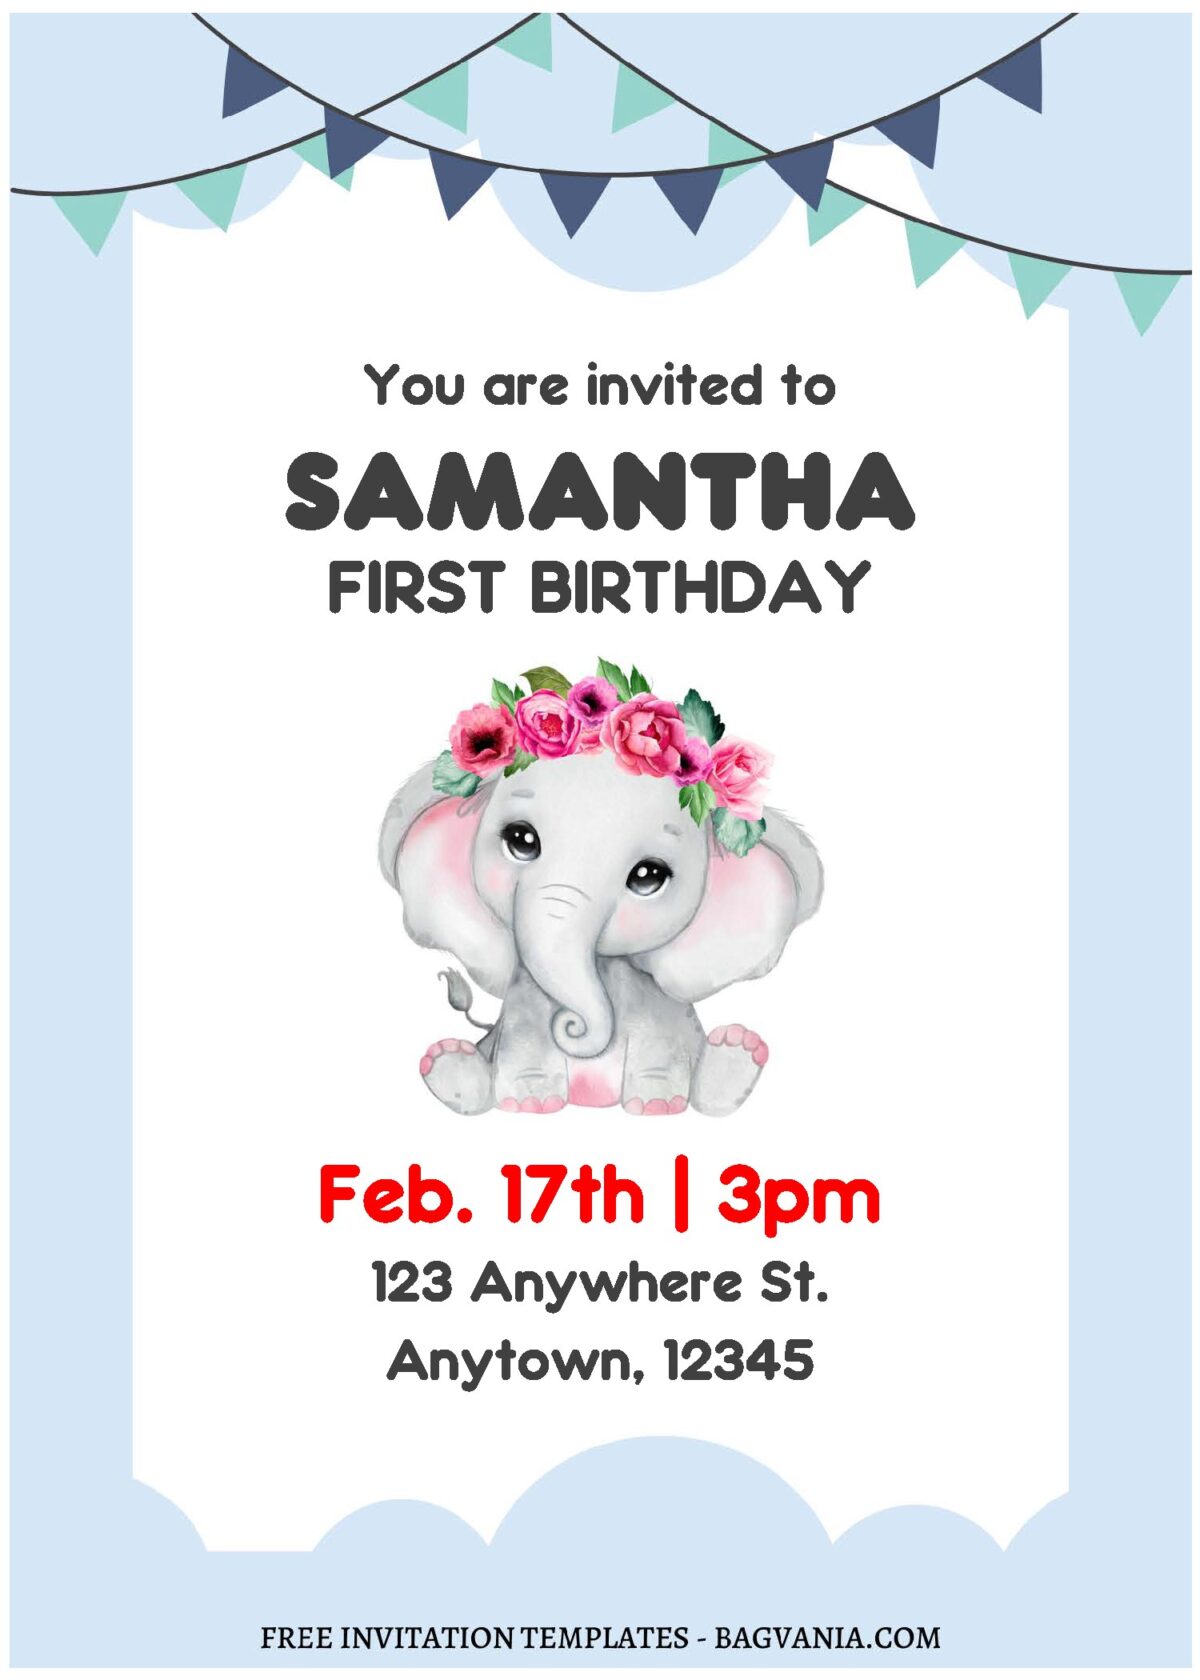 (Free Editable PDF) Watercolor Baby Elephant Birthday Invitation Templates A